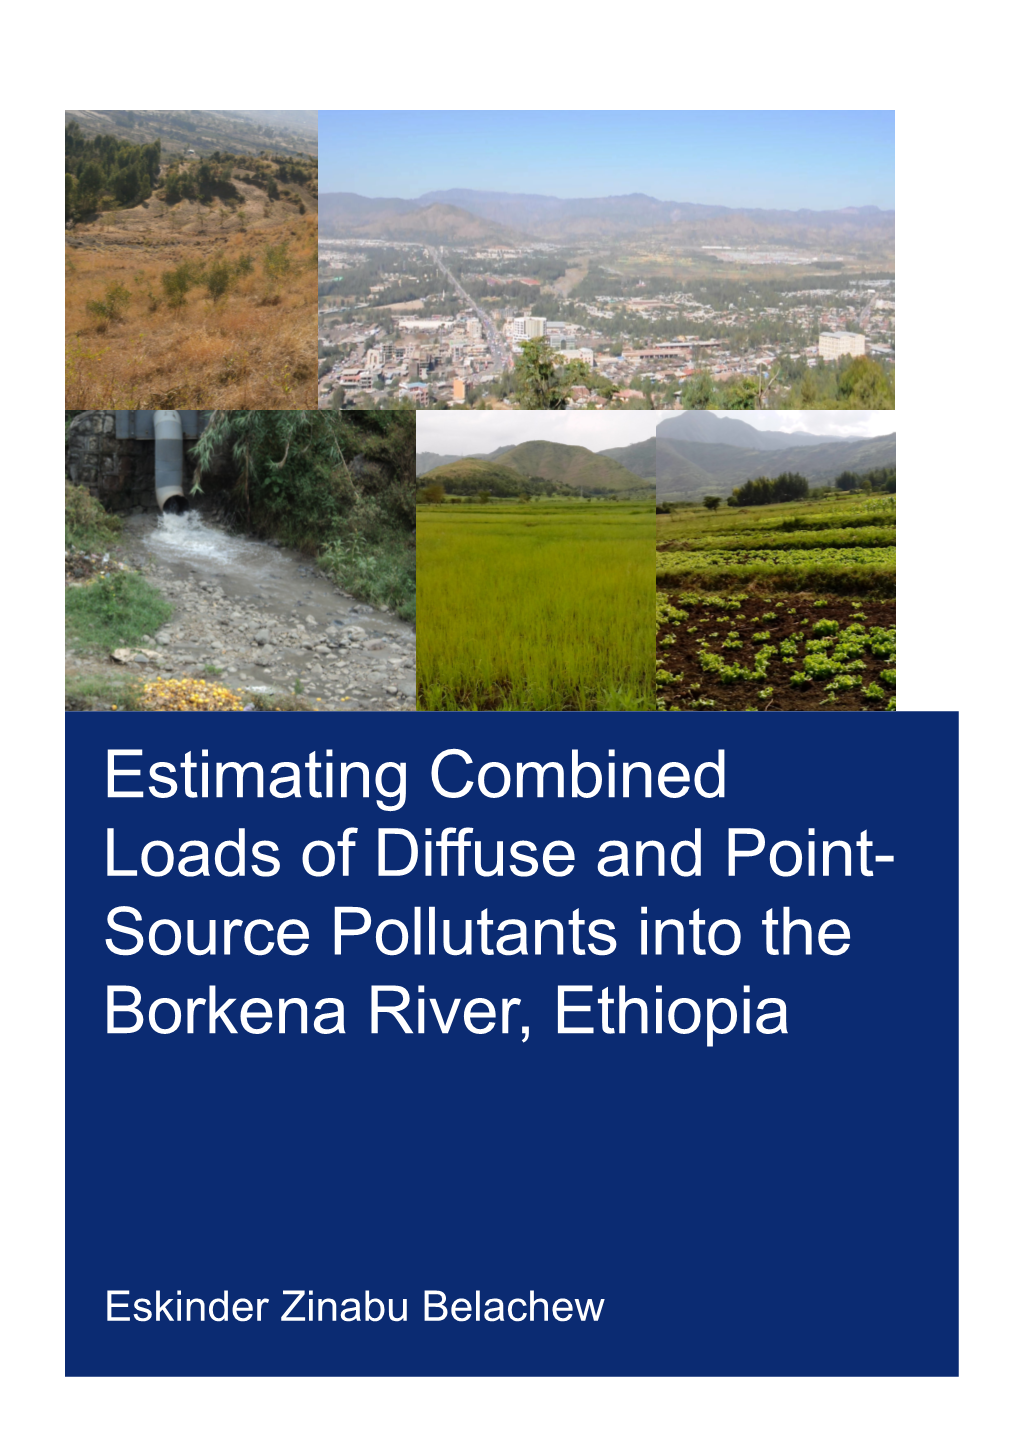 Source Pollutants Into the Borkena River, Ethiopia